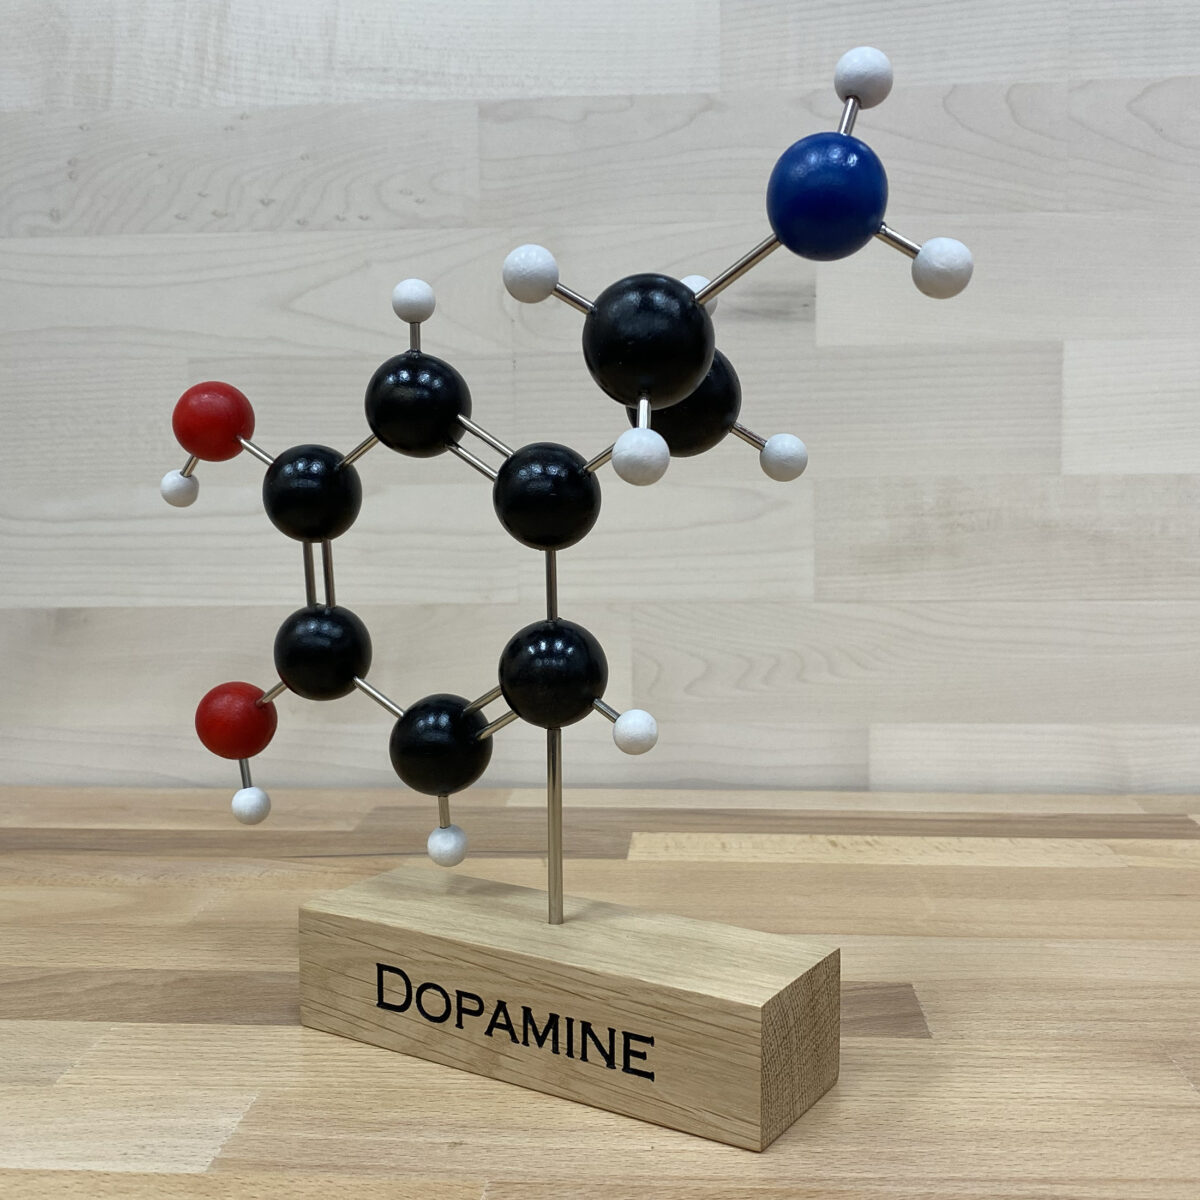 Dopamine molecule model